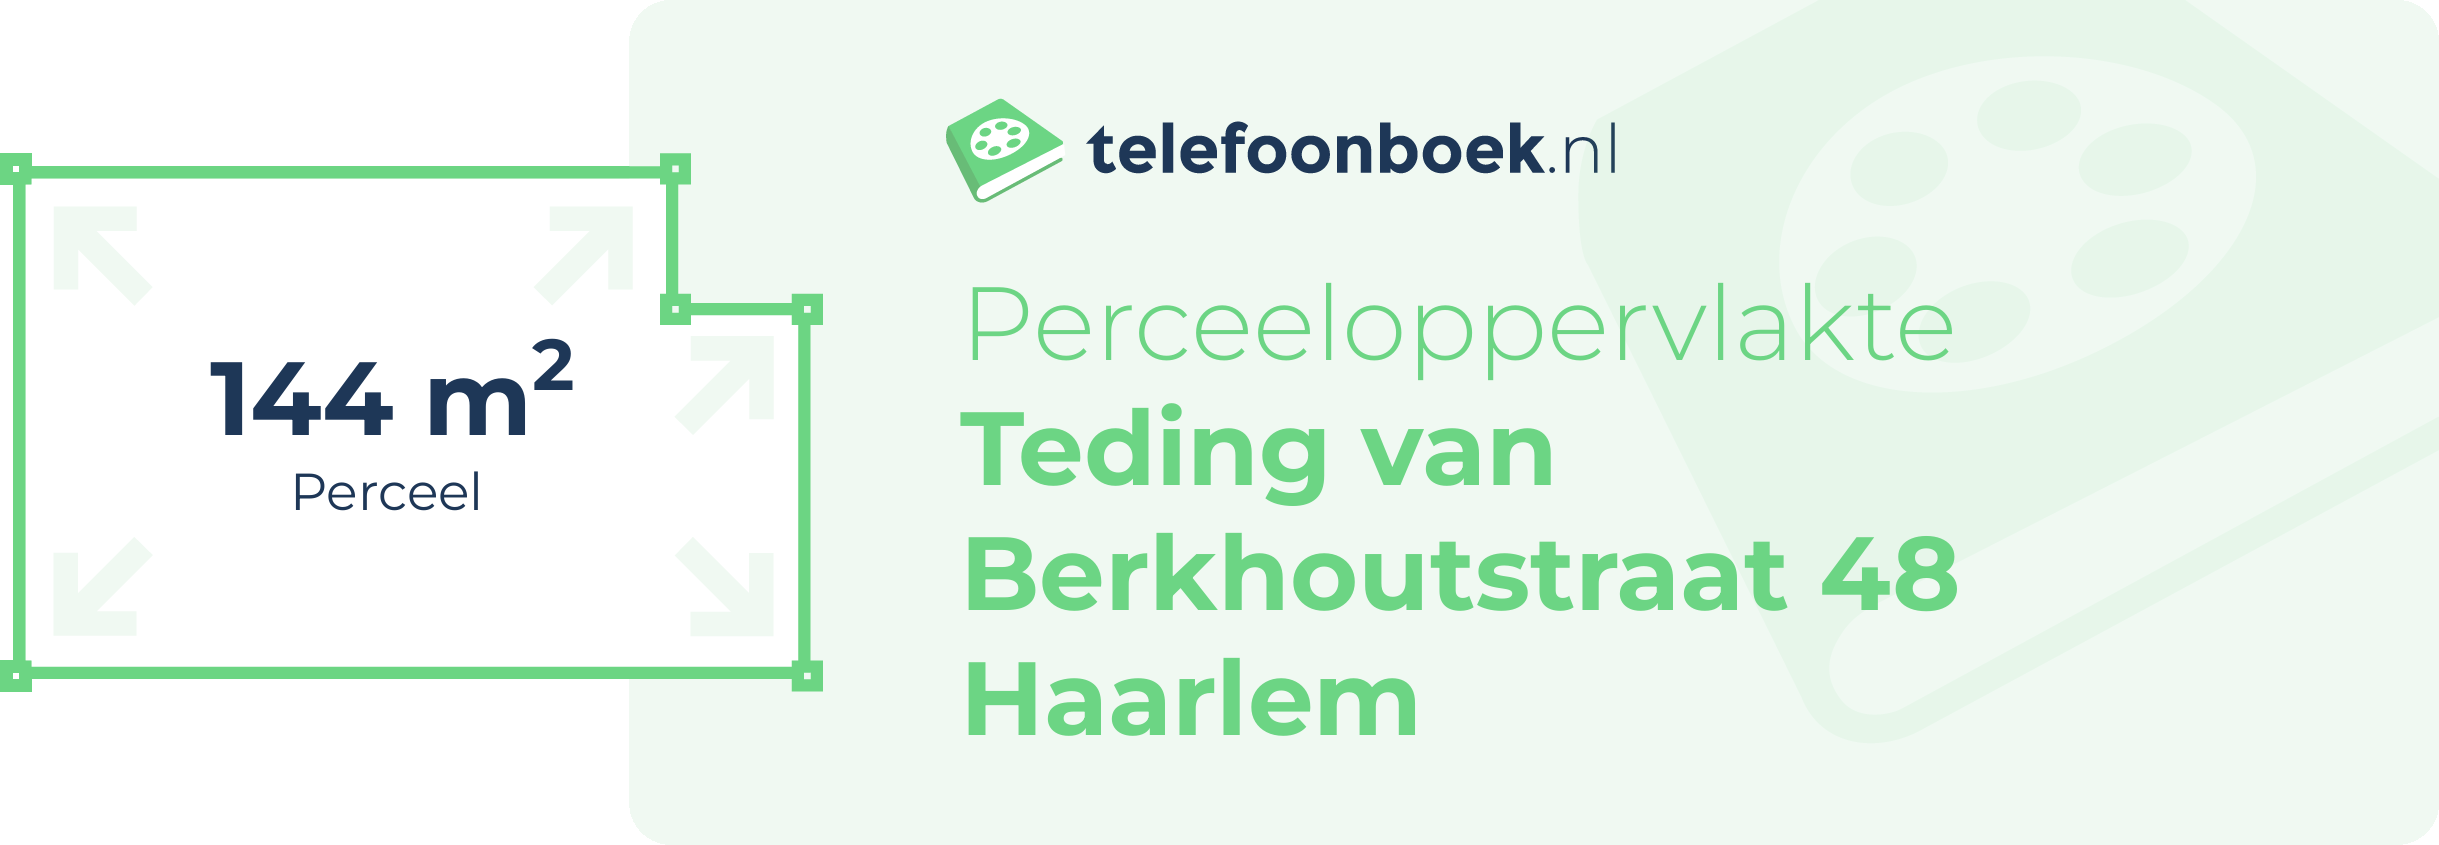 Perceeloppervlakte Teding Van Berkhoutstraat 48 Haarlem